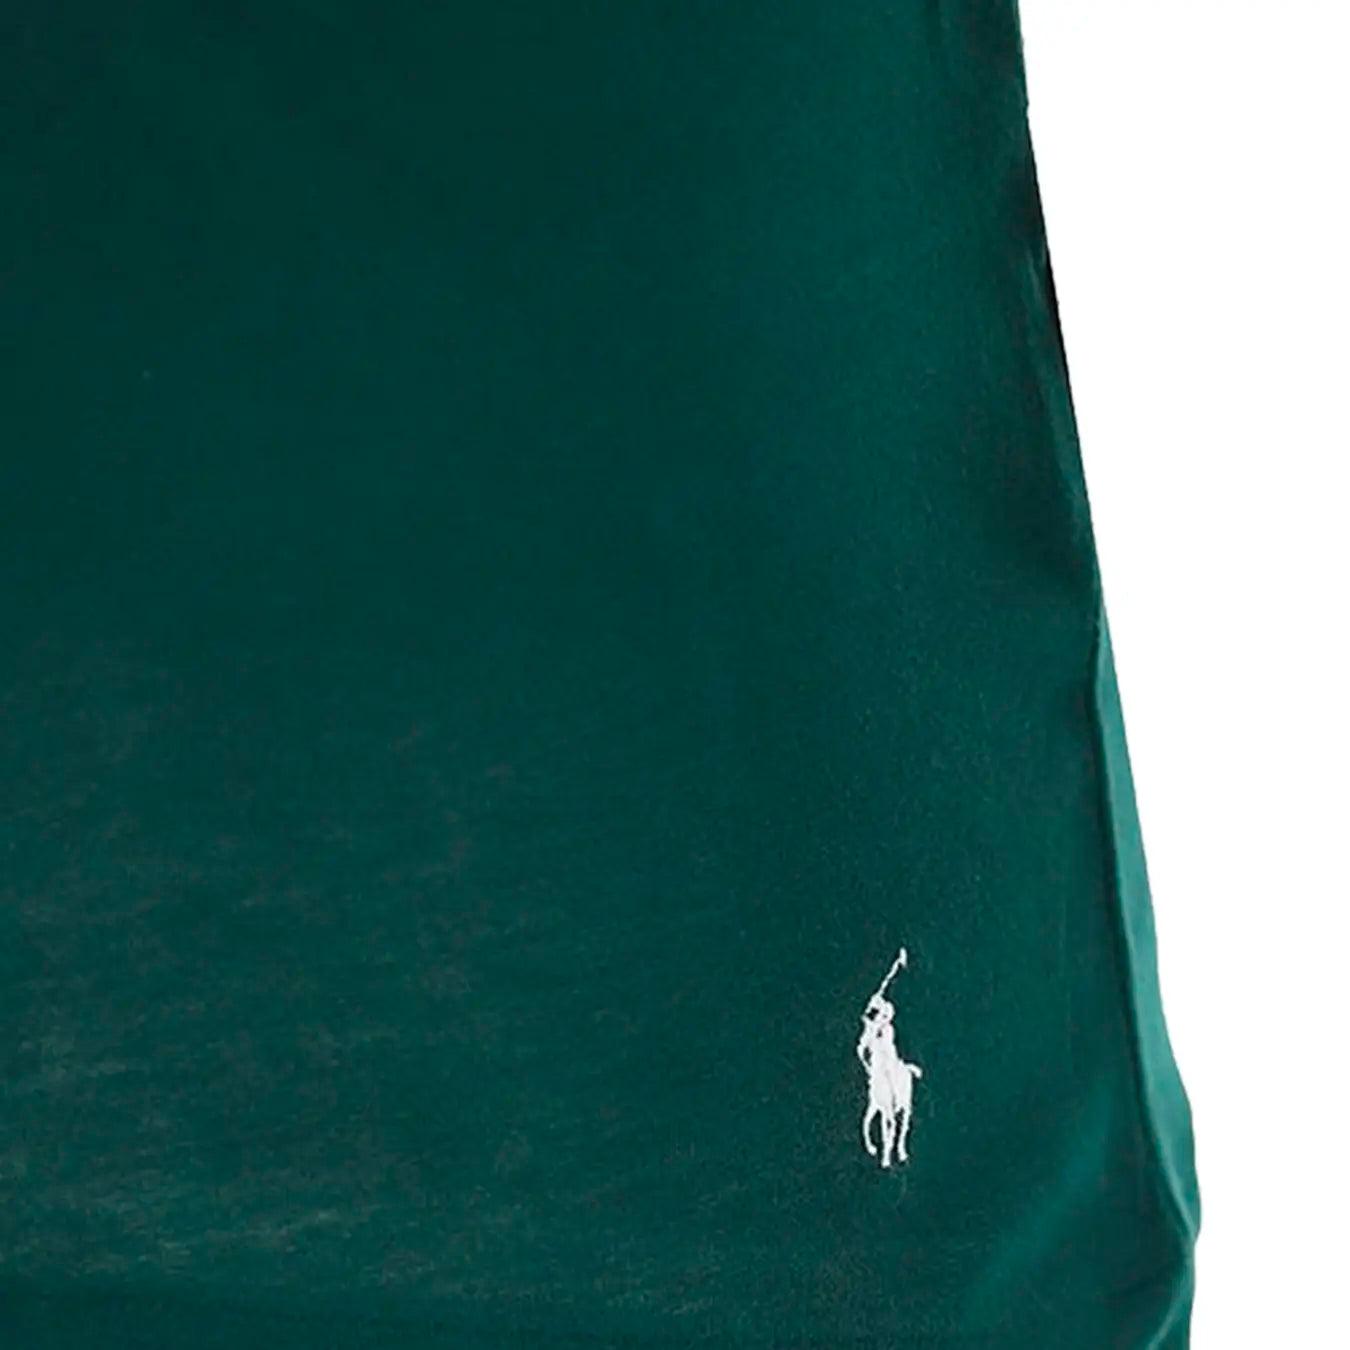 Polo Ralph Lauren t Shirt mc, 714830304, s/s Crew 3 Pack Undershirt, 017grn Rich Rub, Bassiniboutique.it,&#x20;